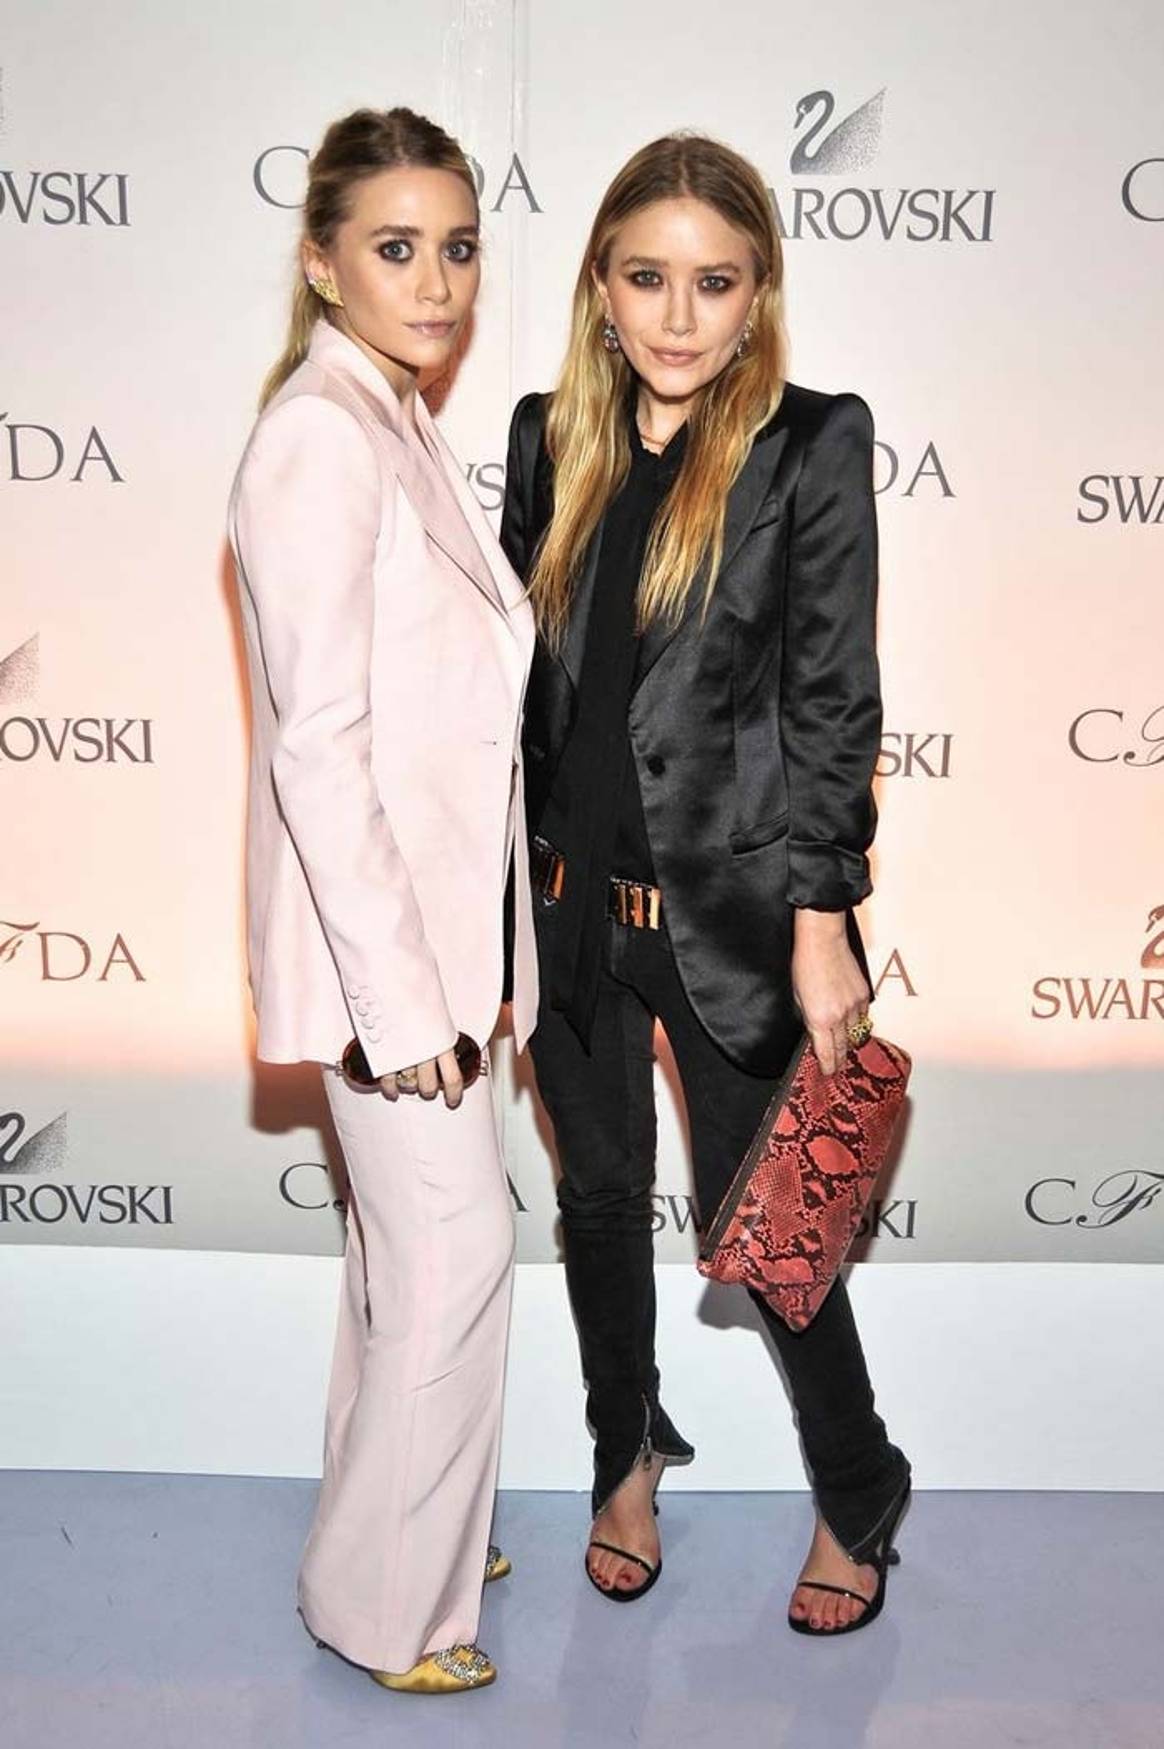 From celebrity status to fashion designer - Part II: Mary-Kate & Ashley Olsen